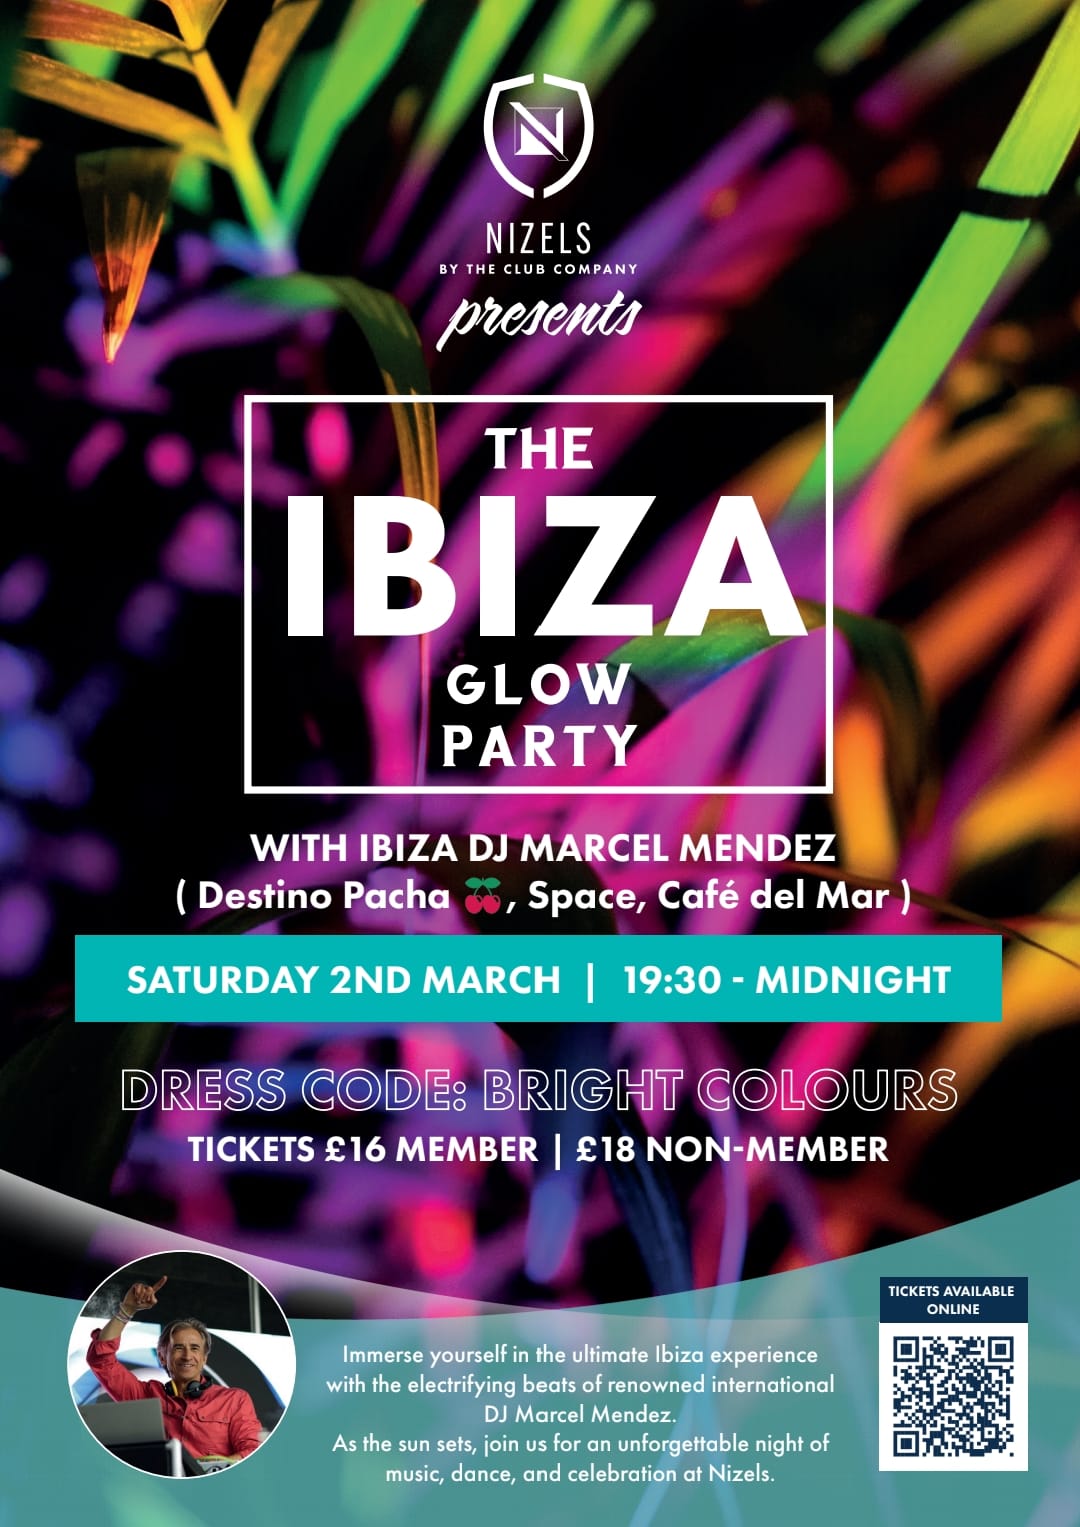 The Ibiza Glow Party at Nizels logo